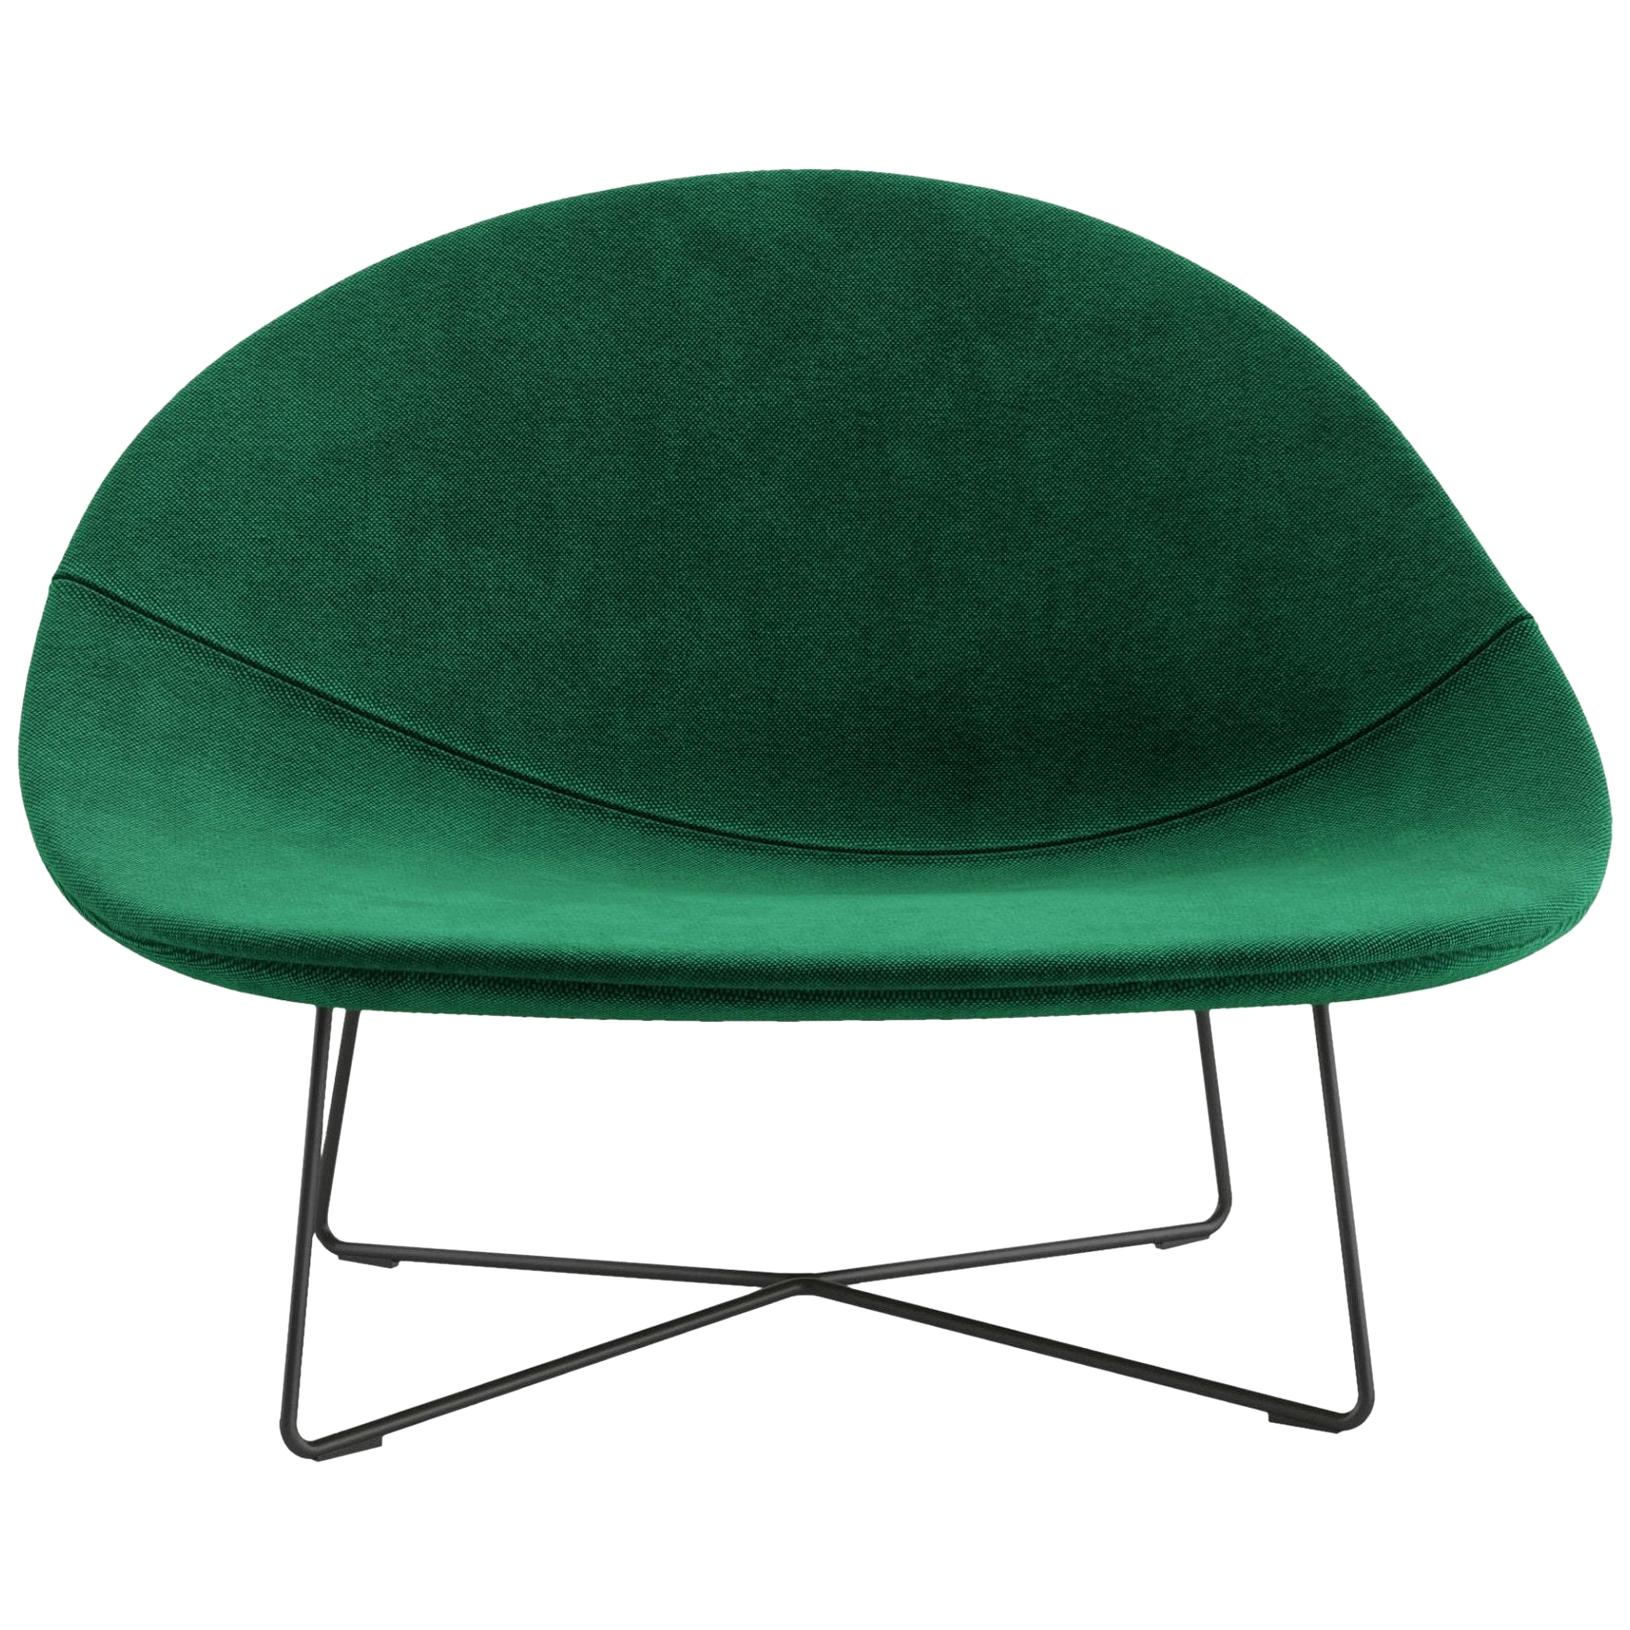 Customizable Tacchini Isola Lounge Chair by Claesson Koivisto Rune